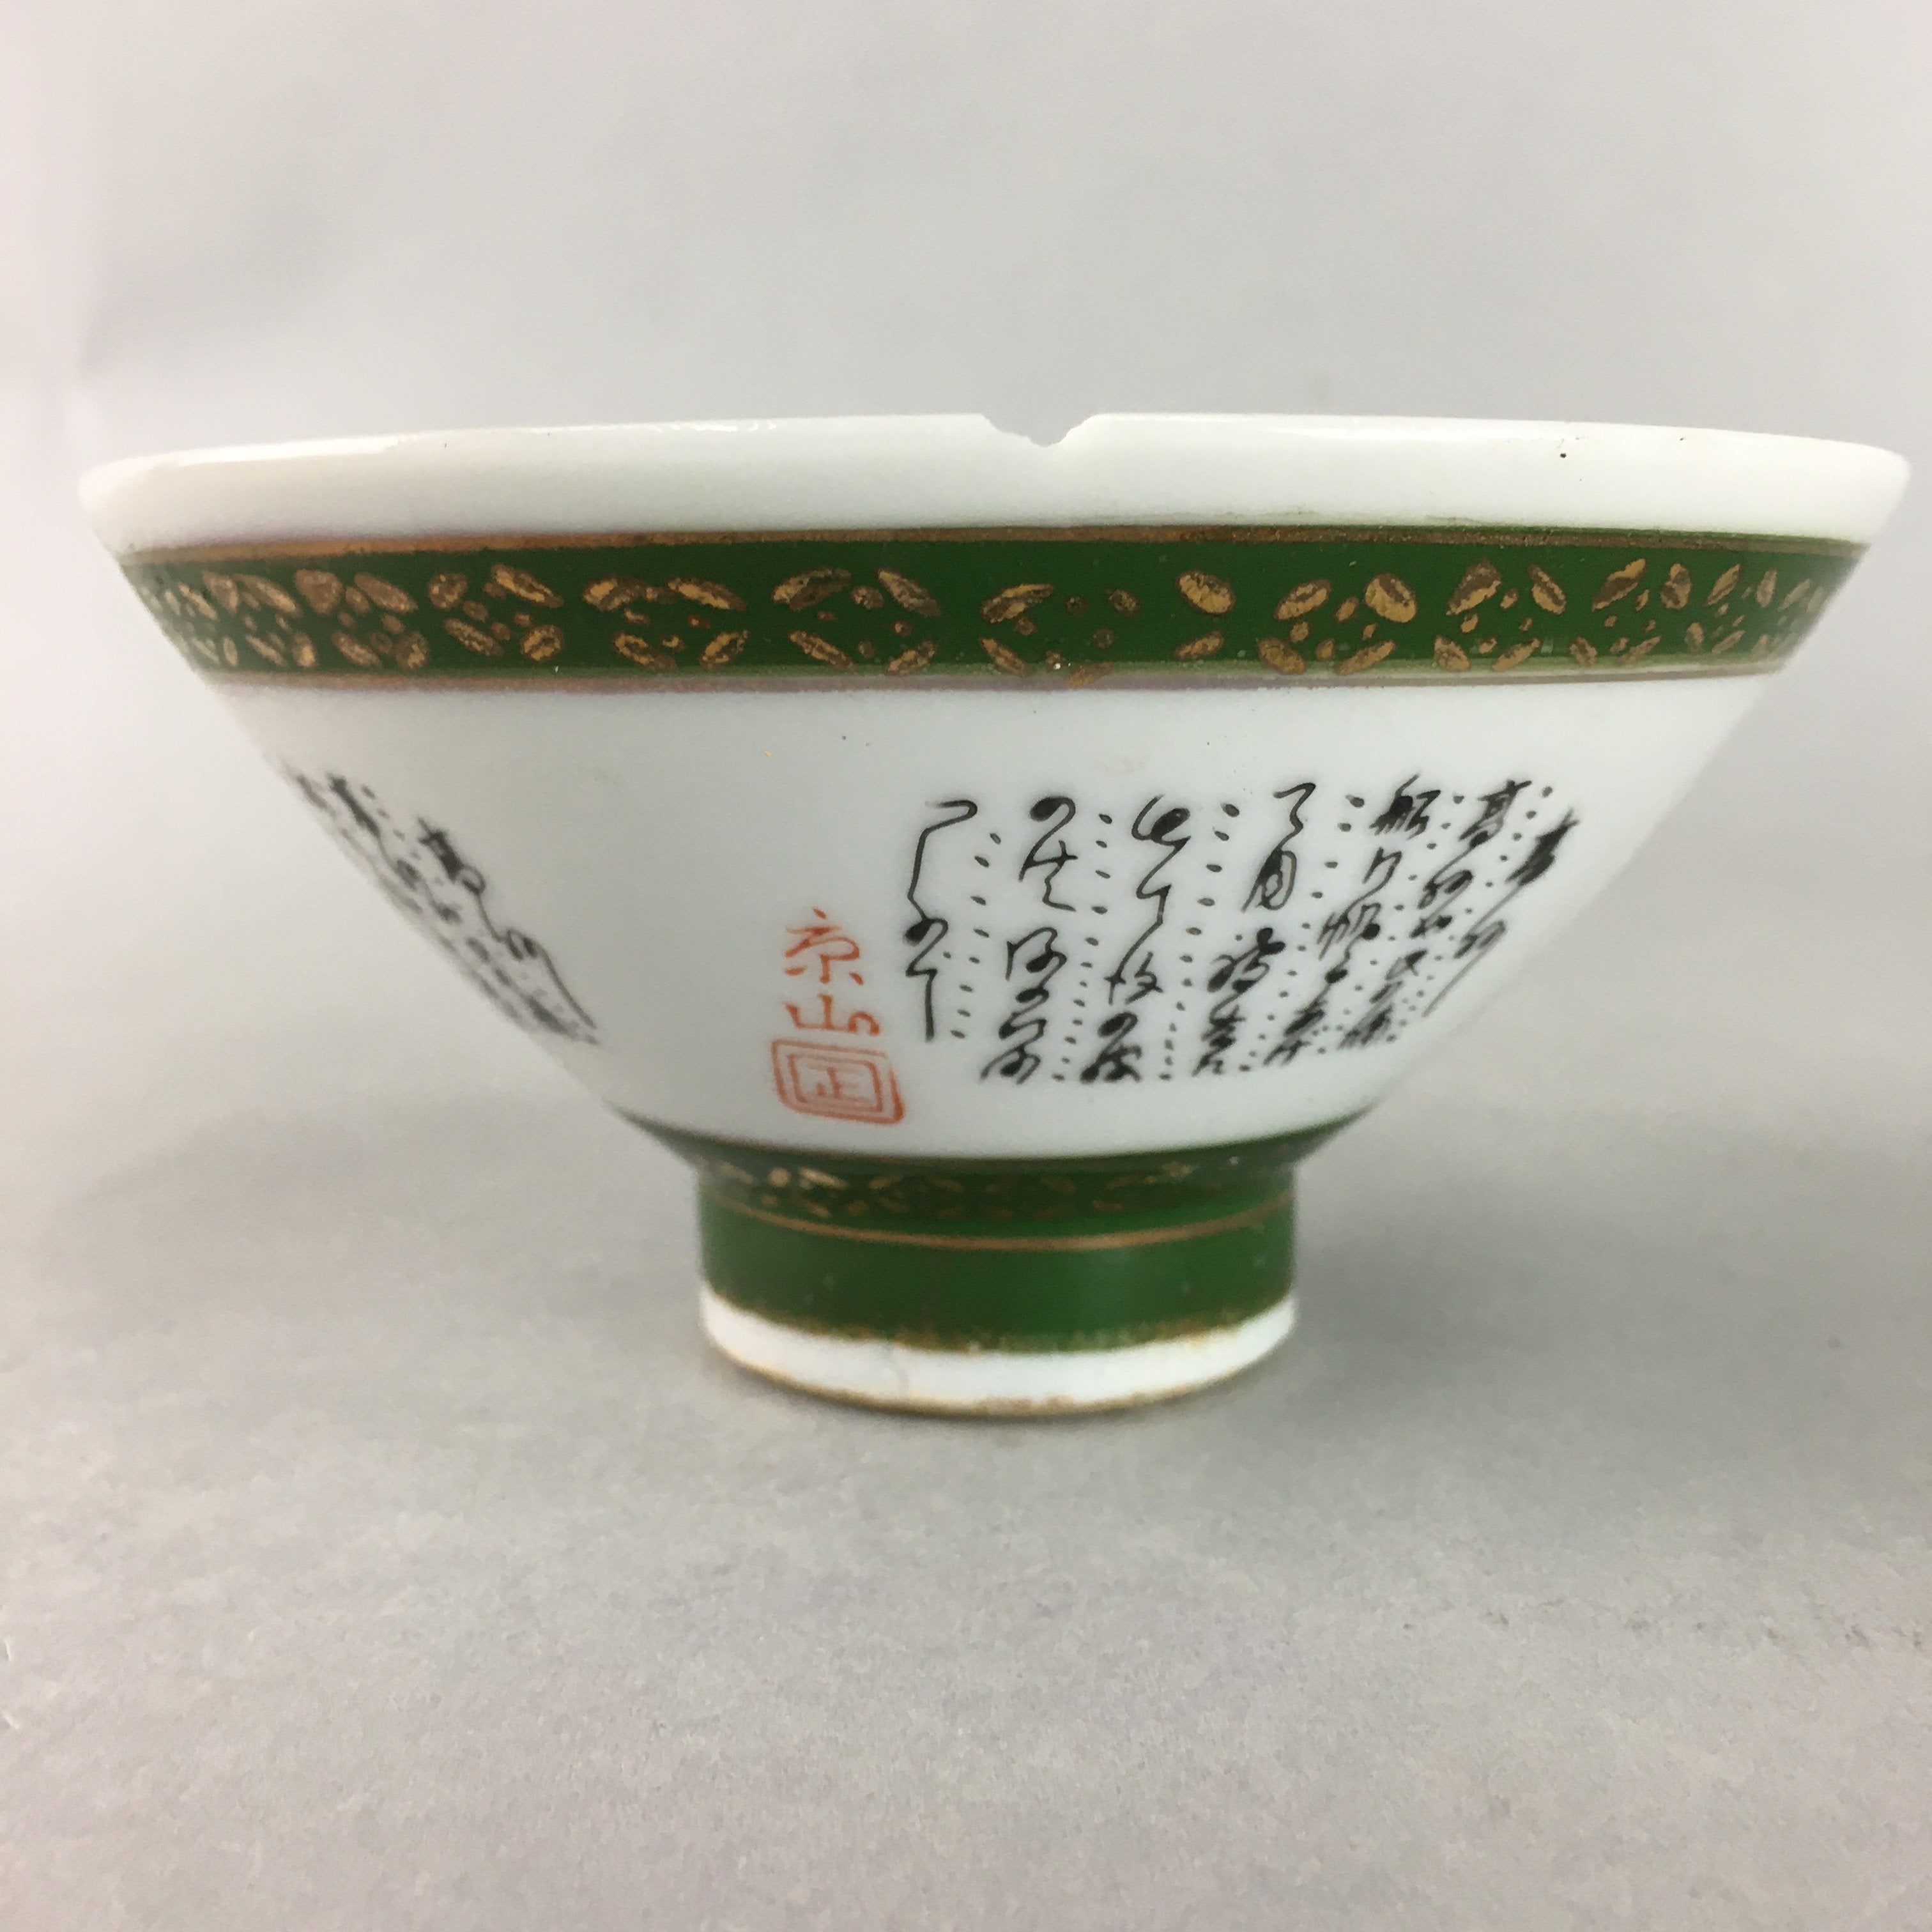 Japanese Porcelain Rice Bowl Vtg Kanji Green Gold Chawan PP151